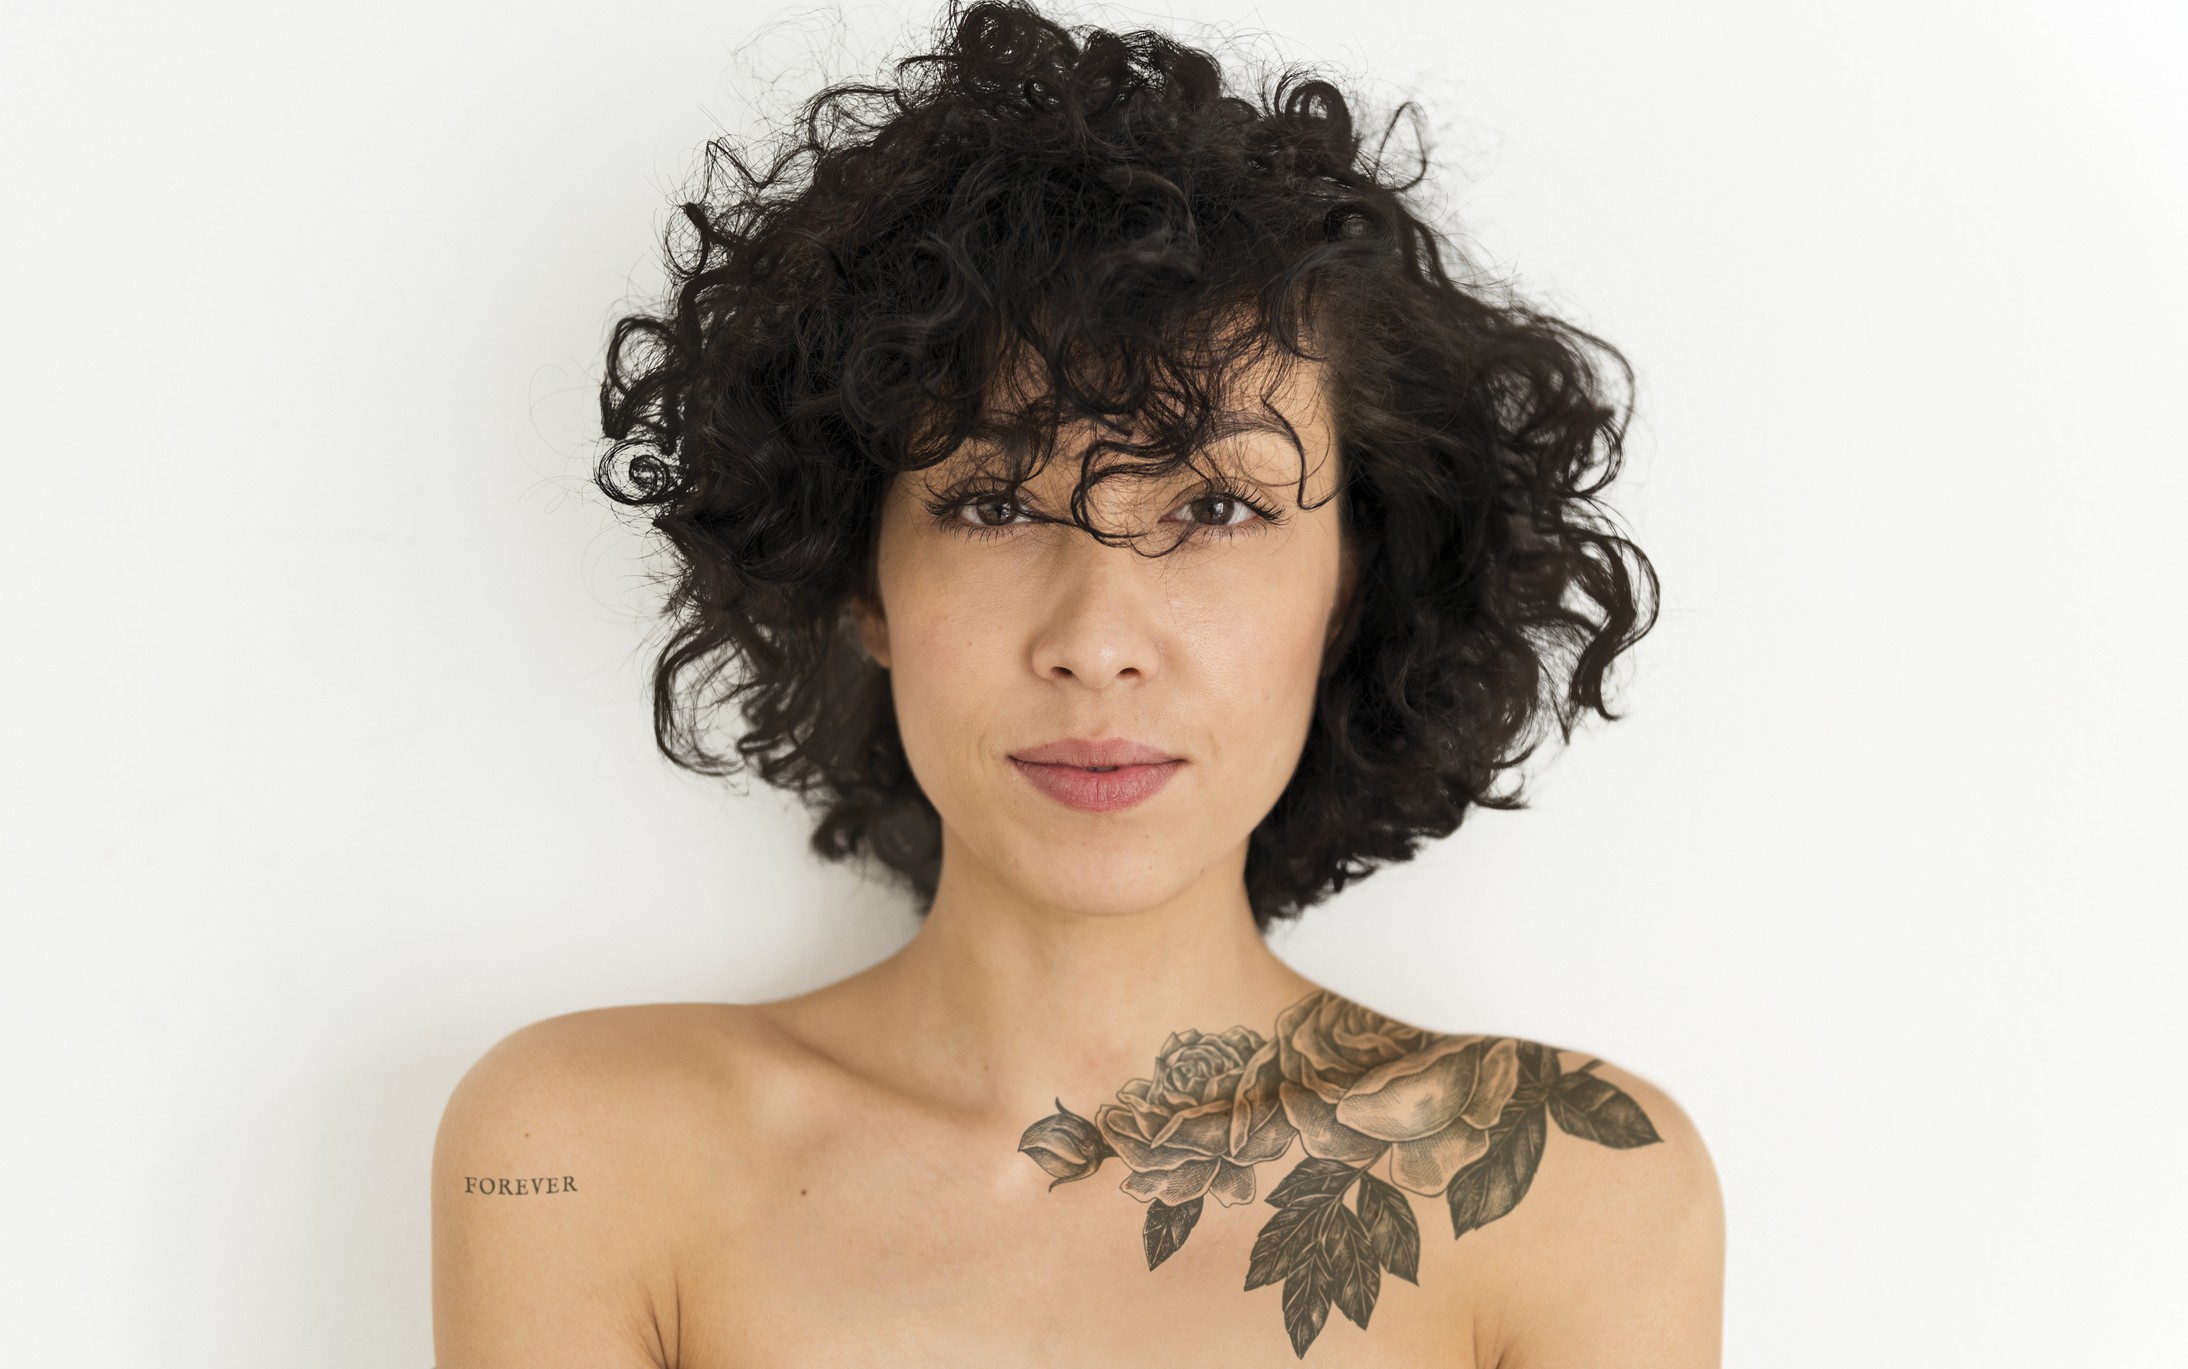 Portrait of a tattooed woman